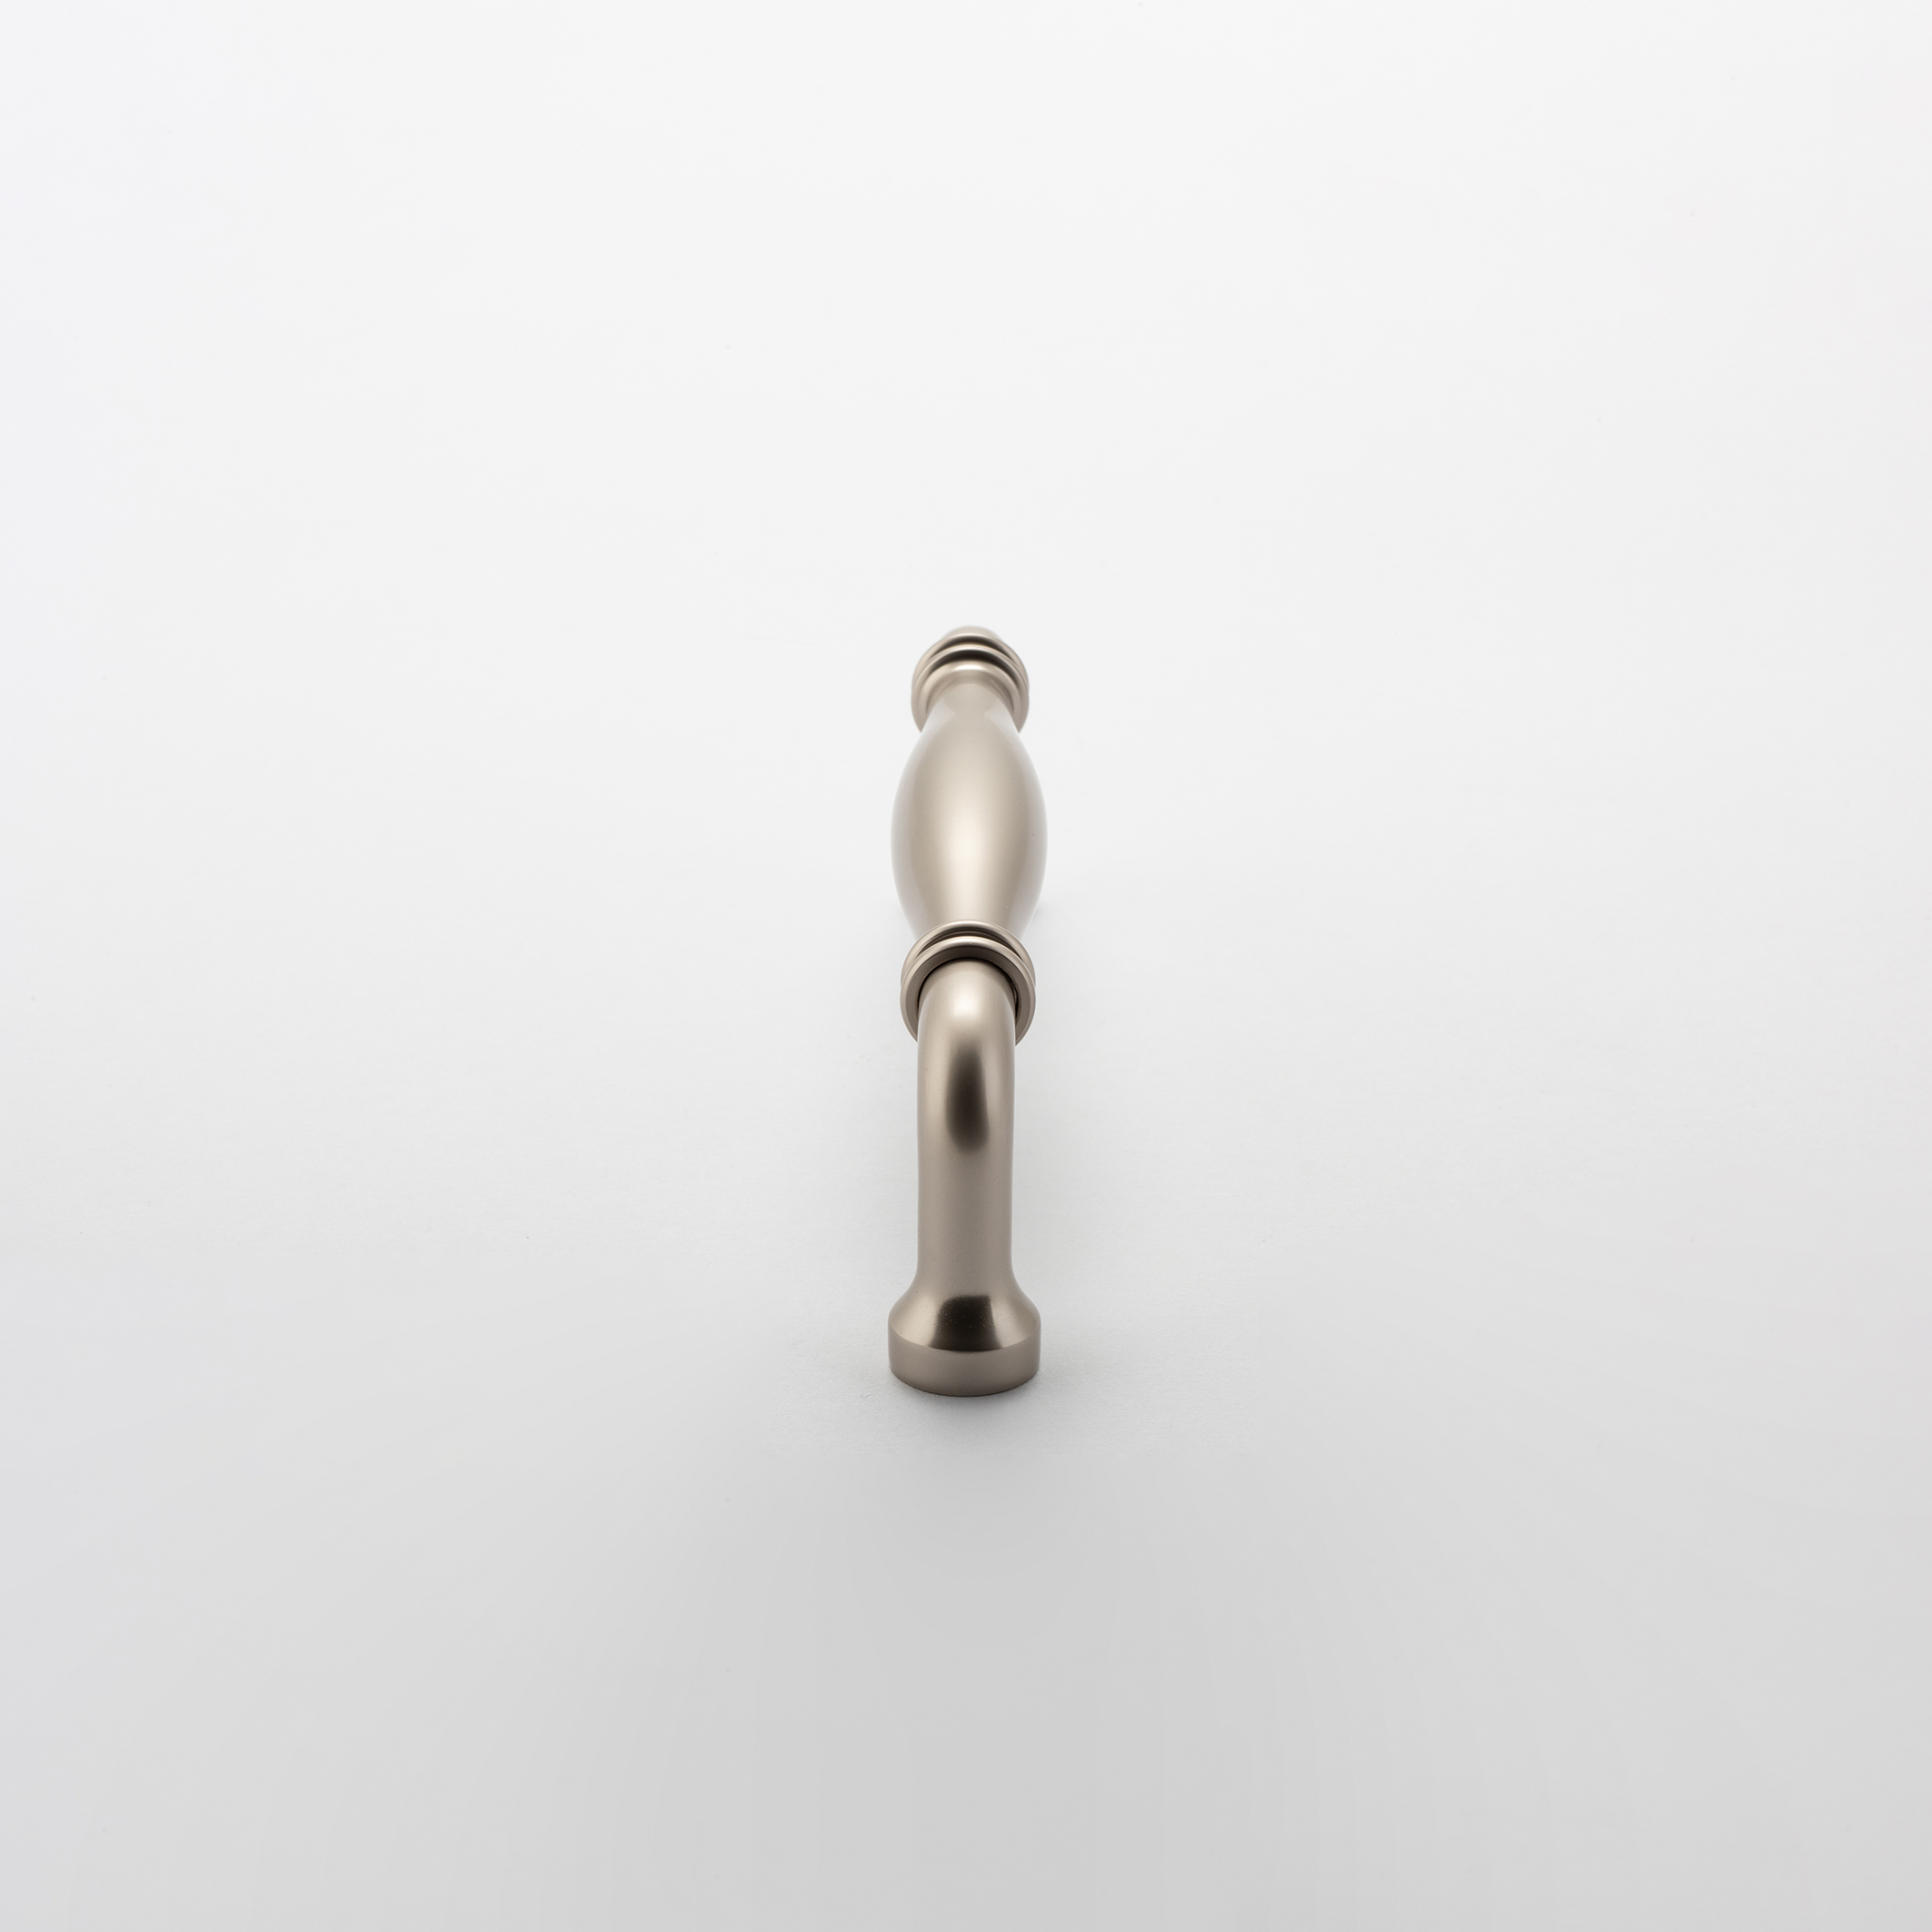 21109 - Sarlat Cabinet Pull - CTC450mm - Satin Nickel